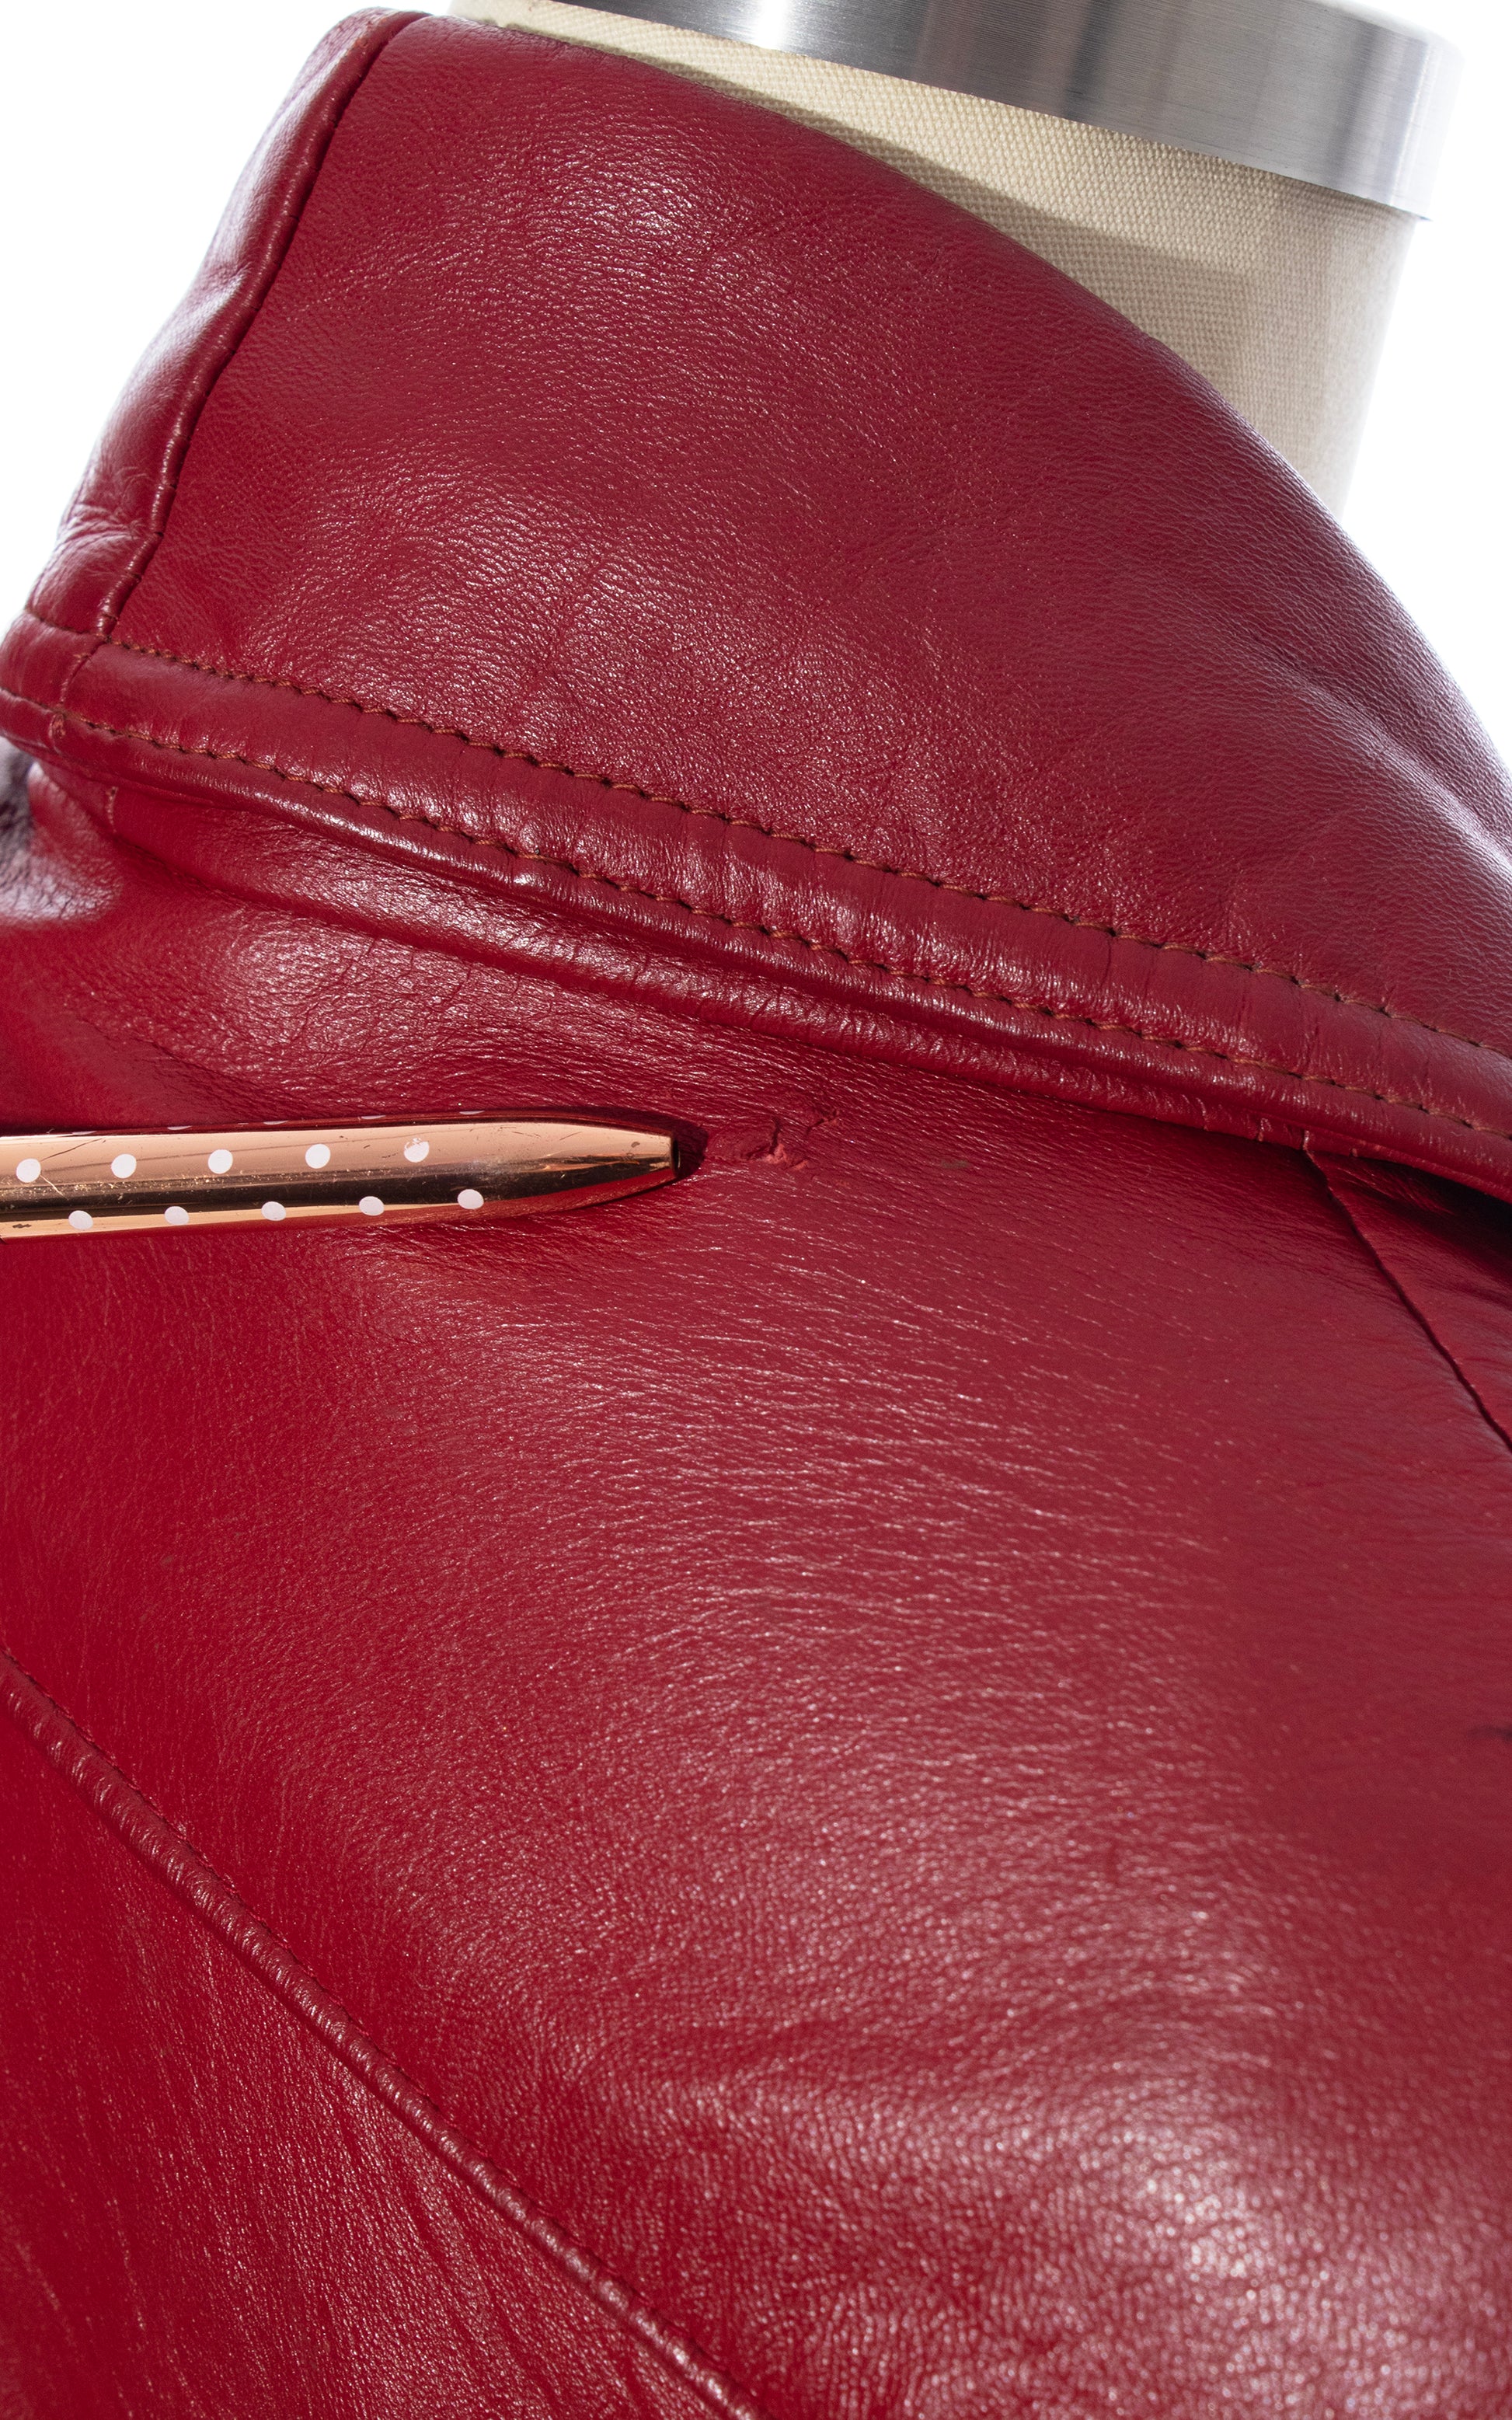 Vintage 70s 1970s Rustic Red Leather Boho Belted Jacket BirthdayLifeVintage